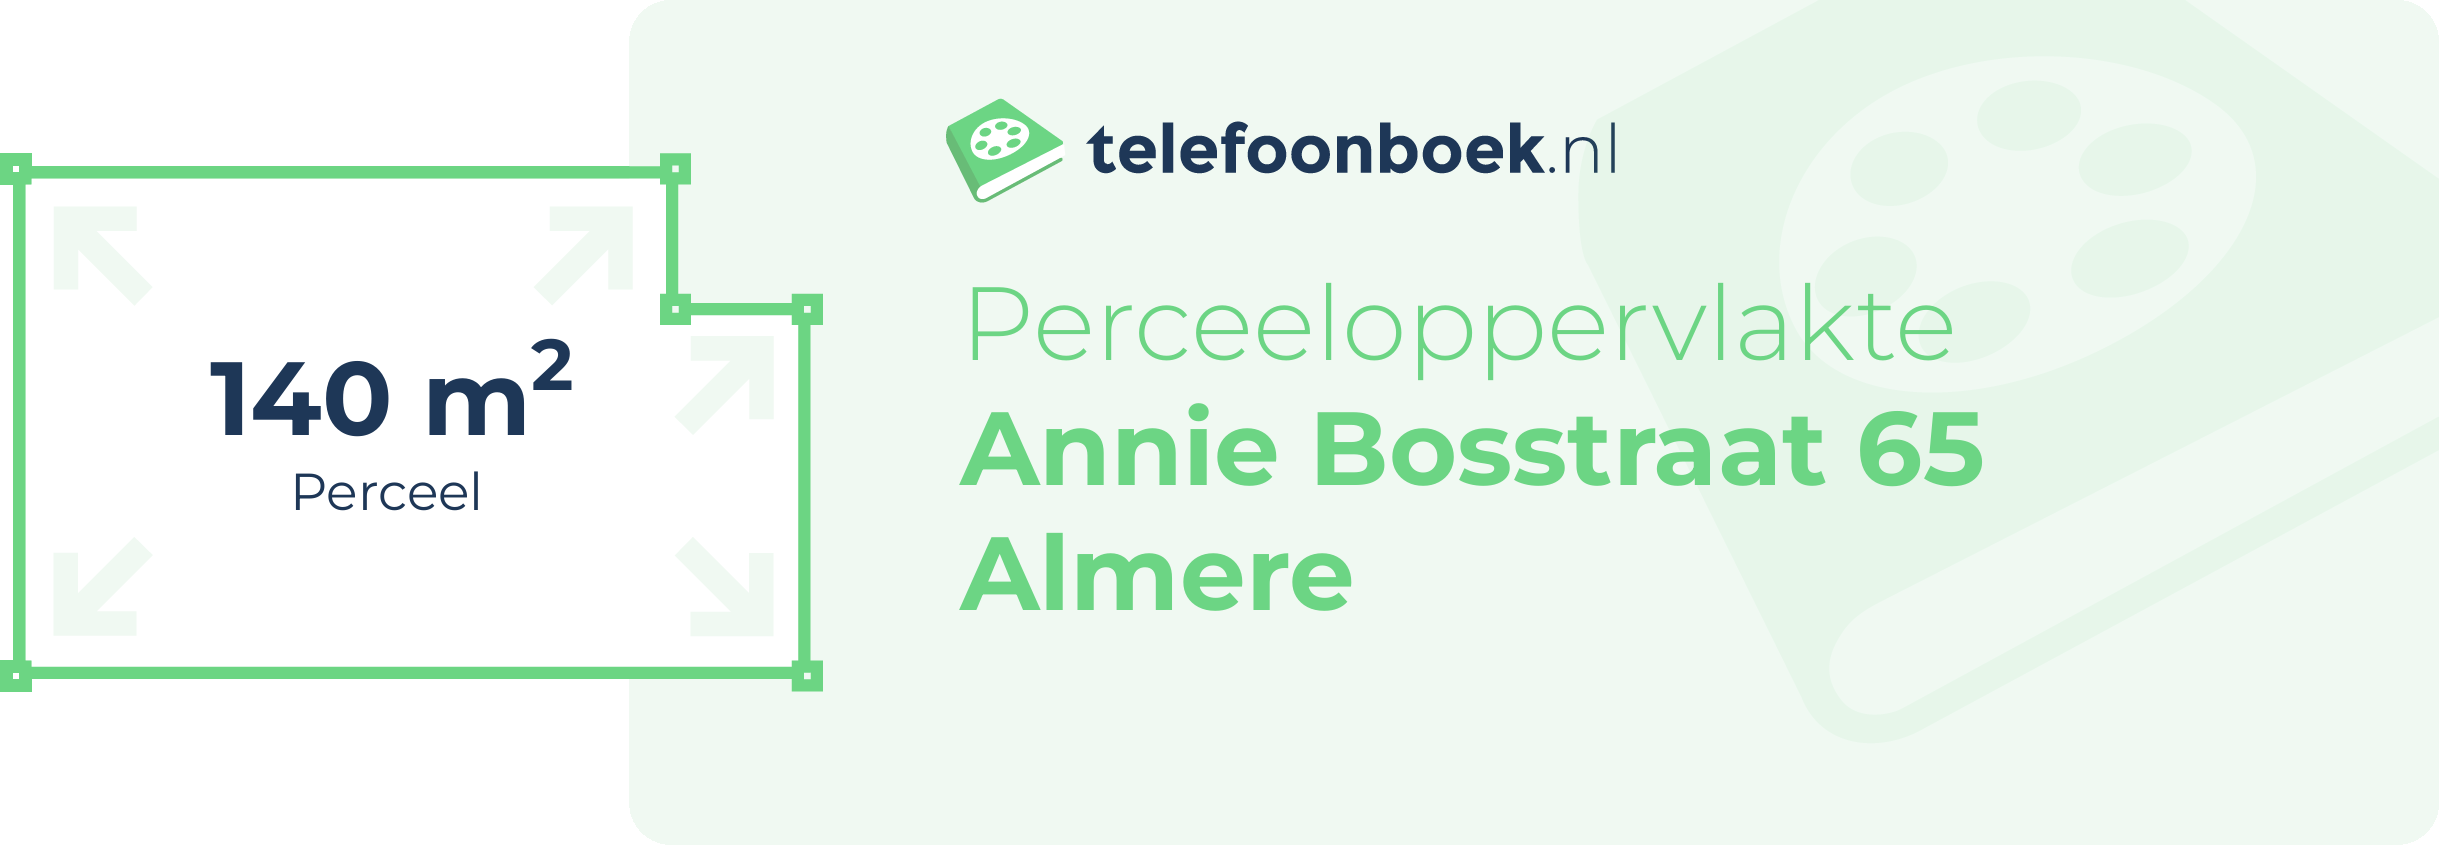 Perceeloppervlakte Annie Bosstraat 65 Almere